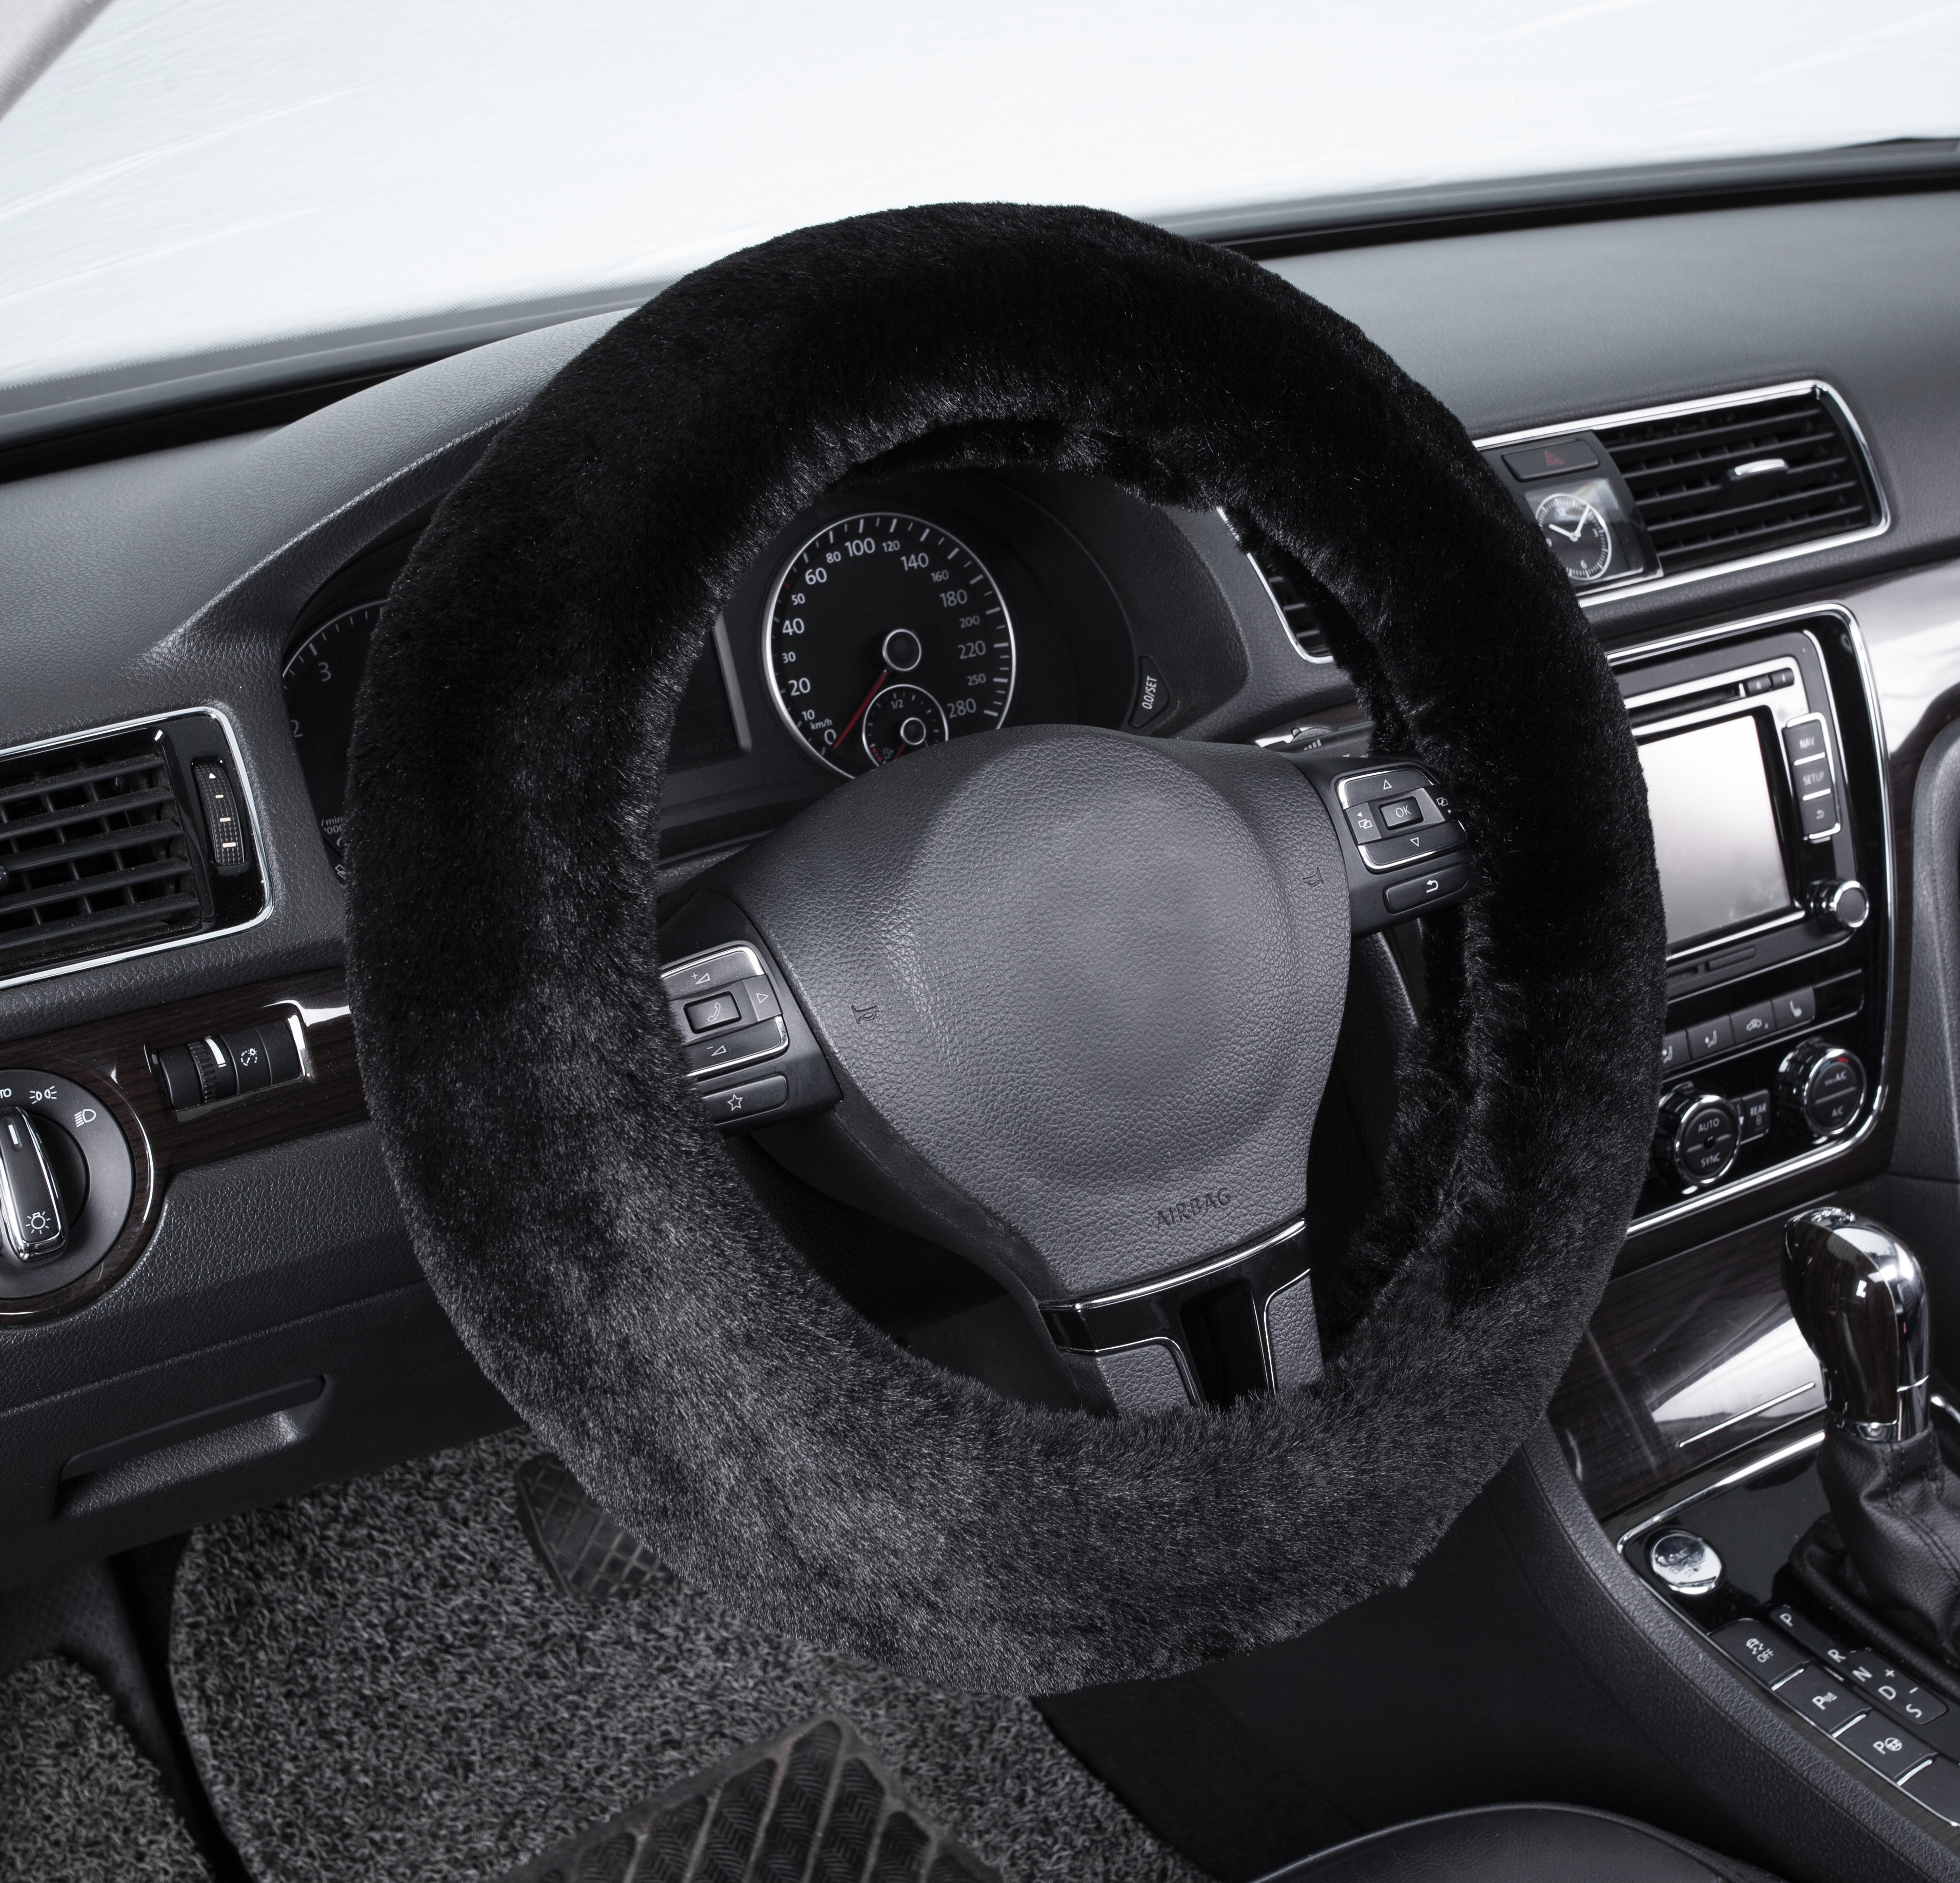 Universal Plush Microfiber Steering Wheel Cover Cover Funda Volante Coche  Accessory For Couvre Volant Voiture J220808 From Fadacai09, $19.29